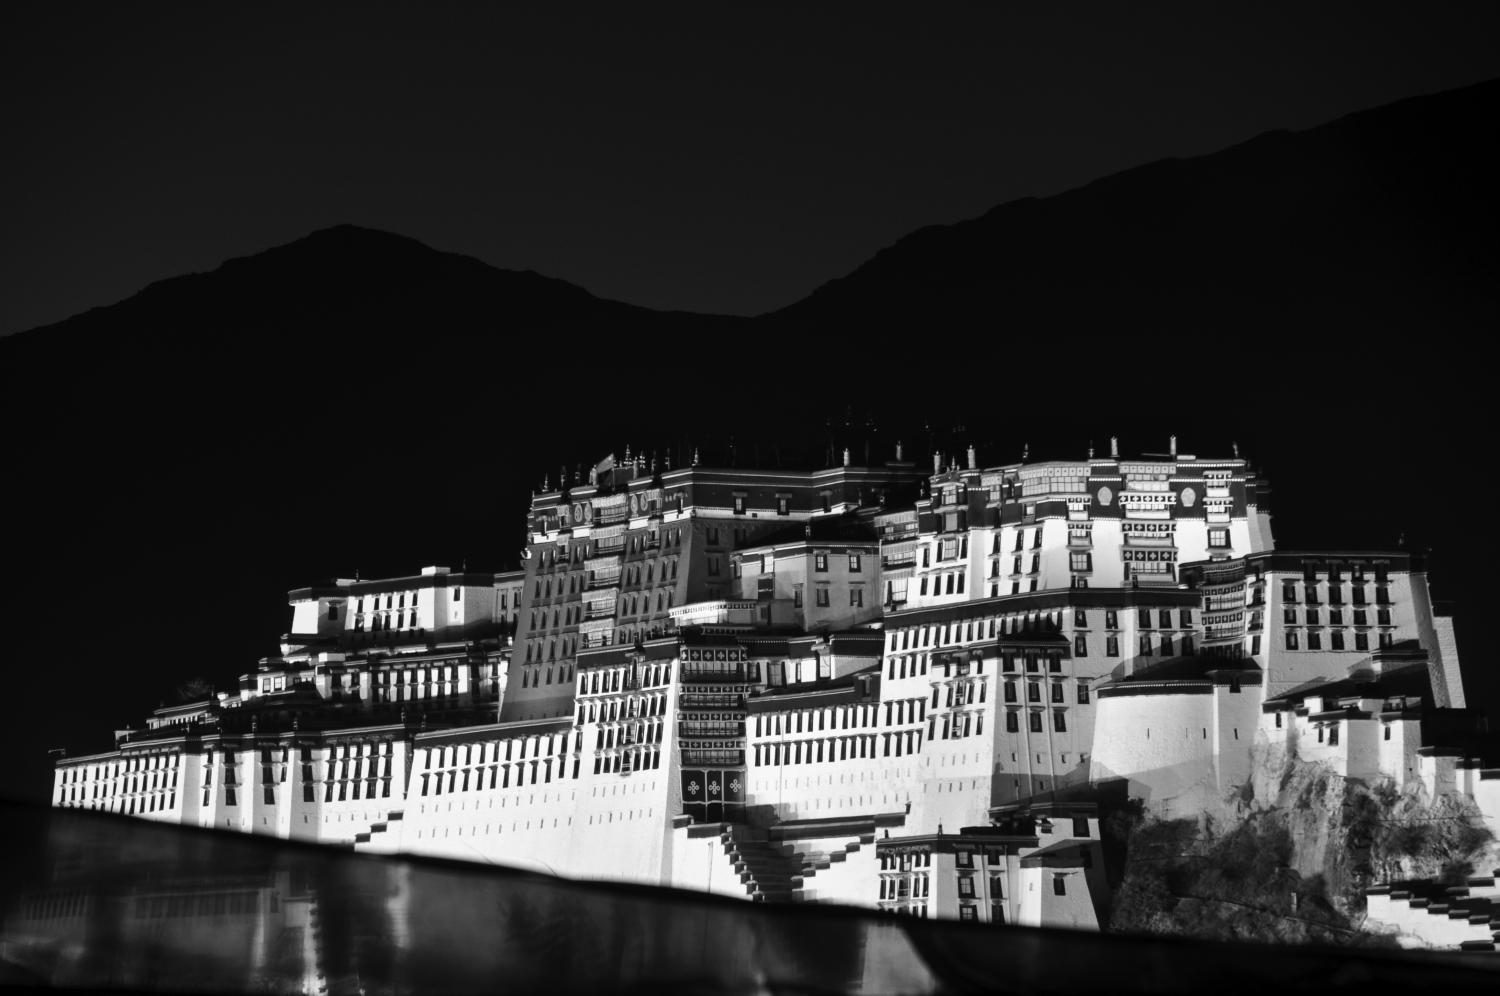 Looking at Life in Lhasa